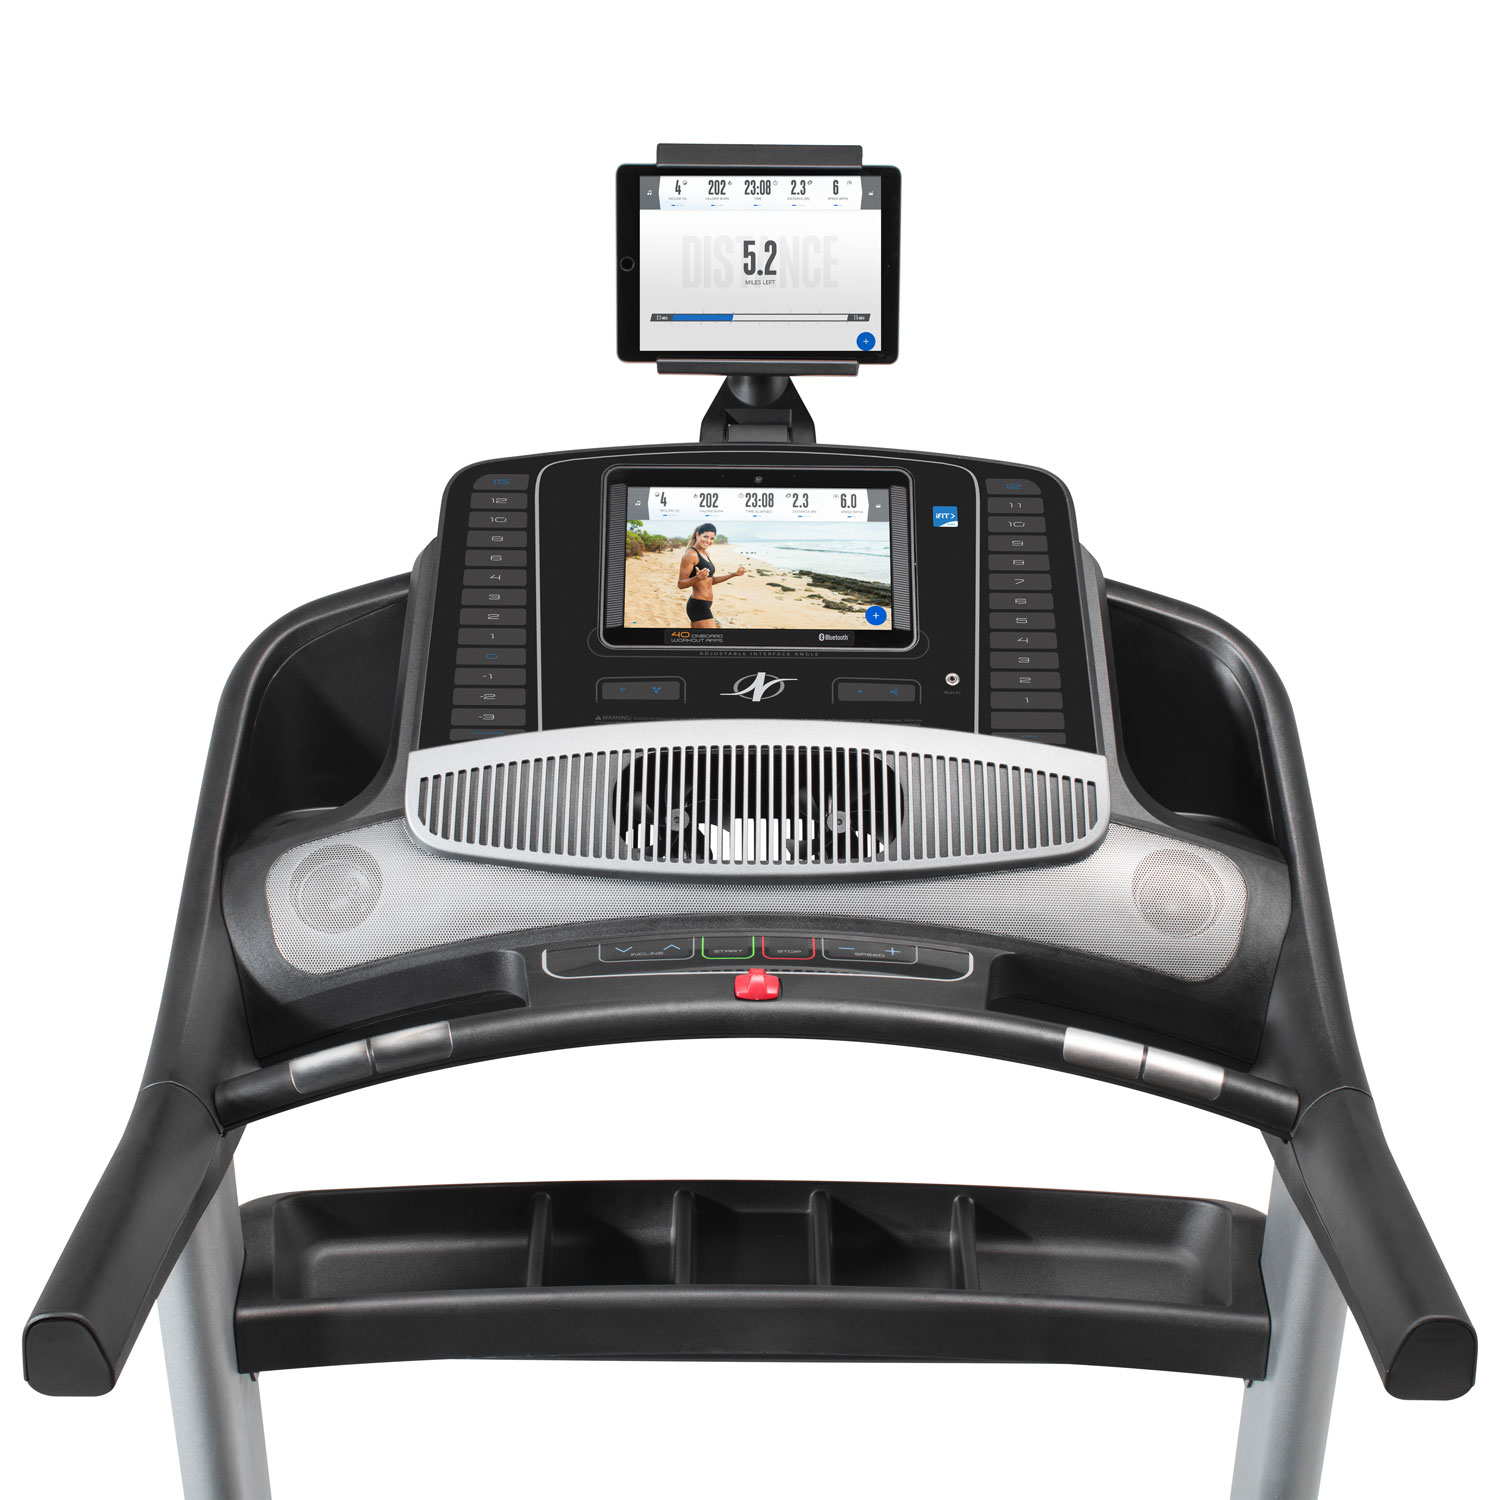 oldable treadmill fitness equipment